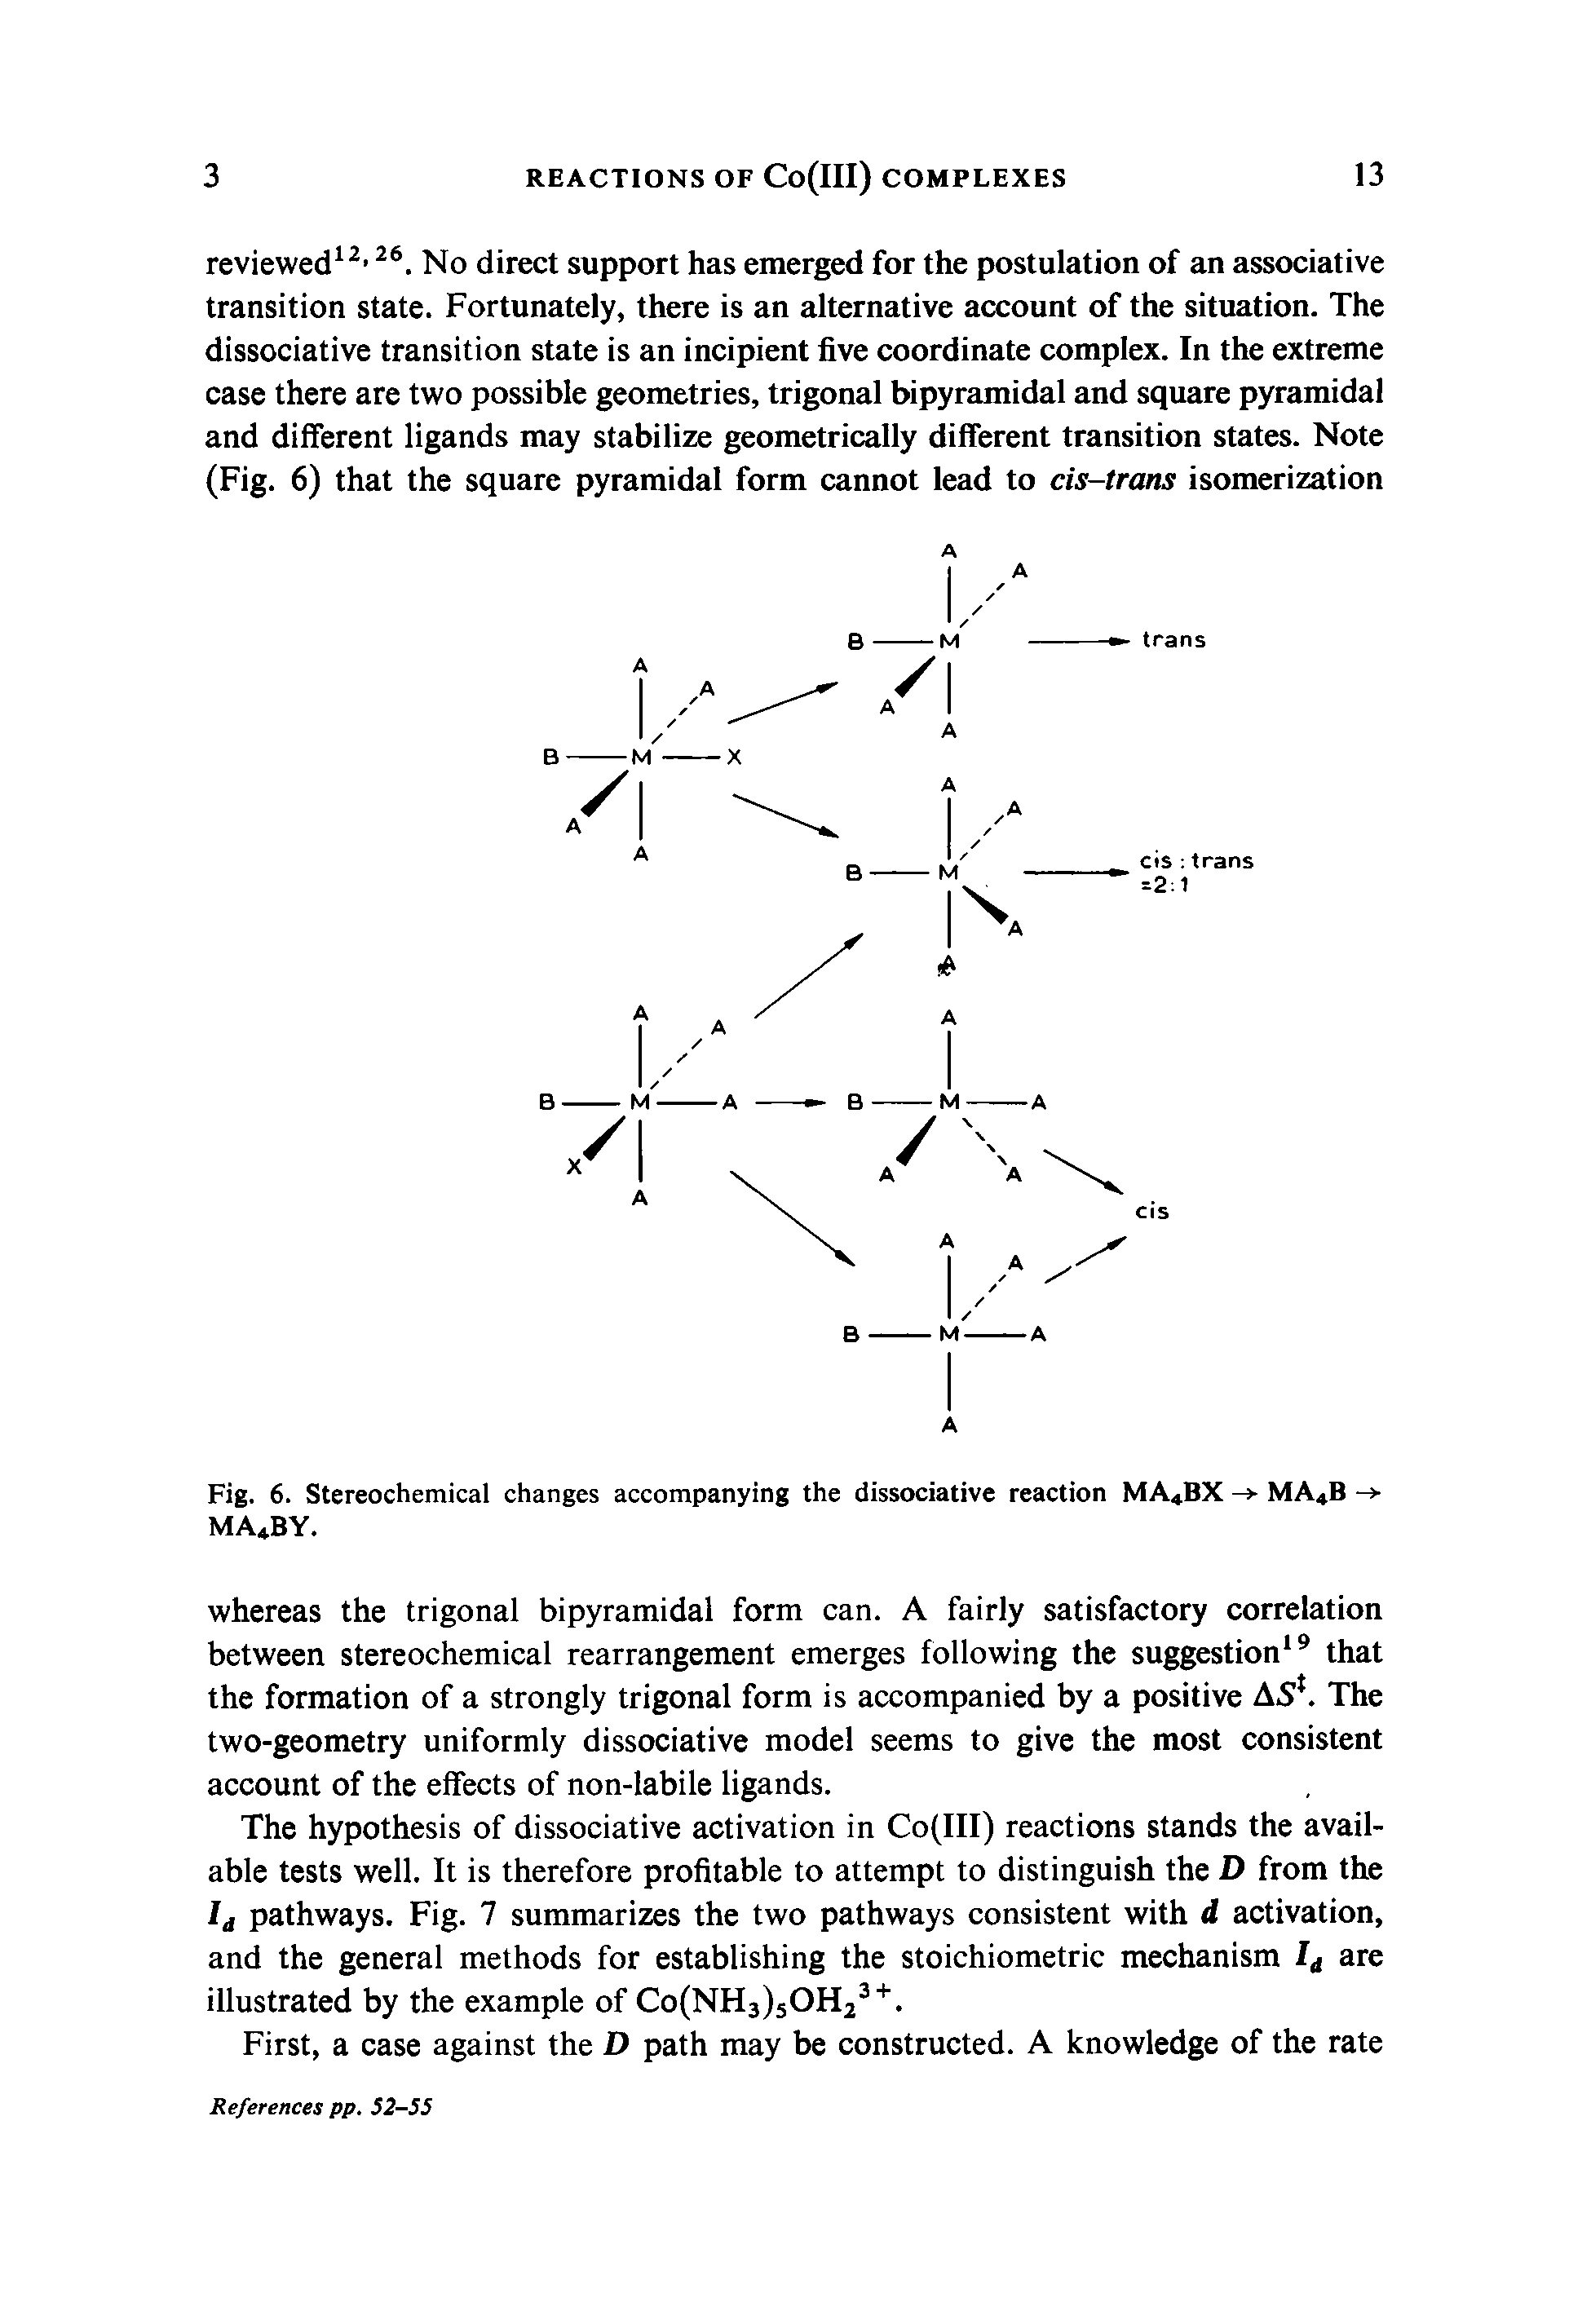 Fig. 6. Stereochemical changes accompanying the dissociative reaction MA BX MA4B MA4BY.